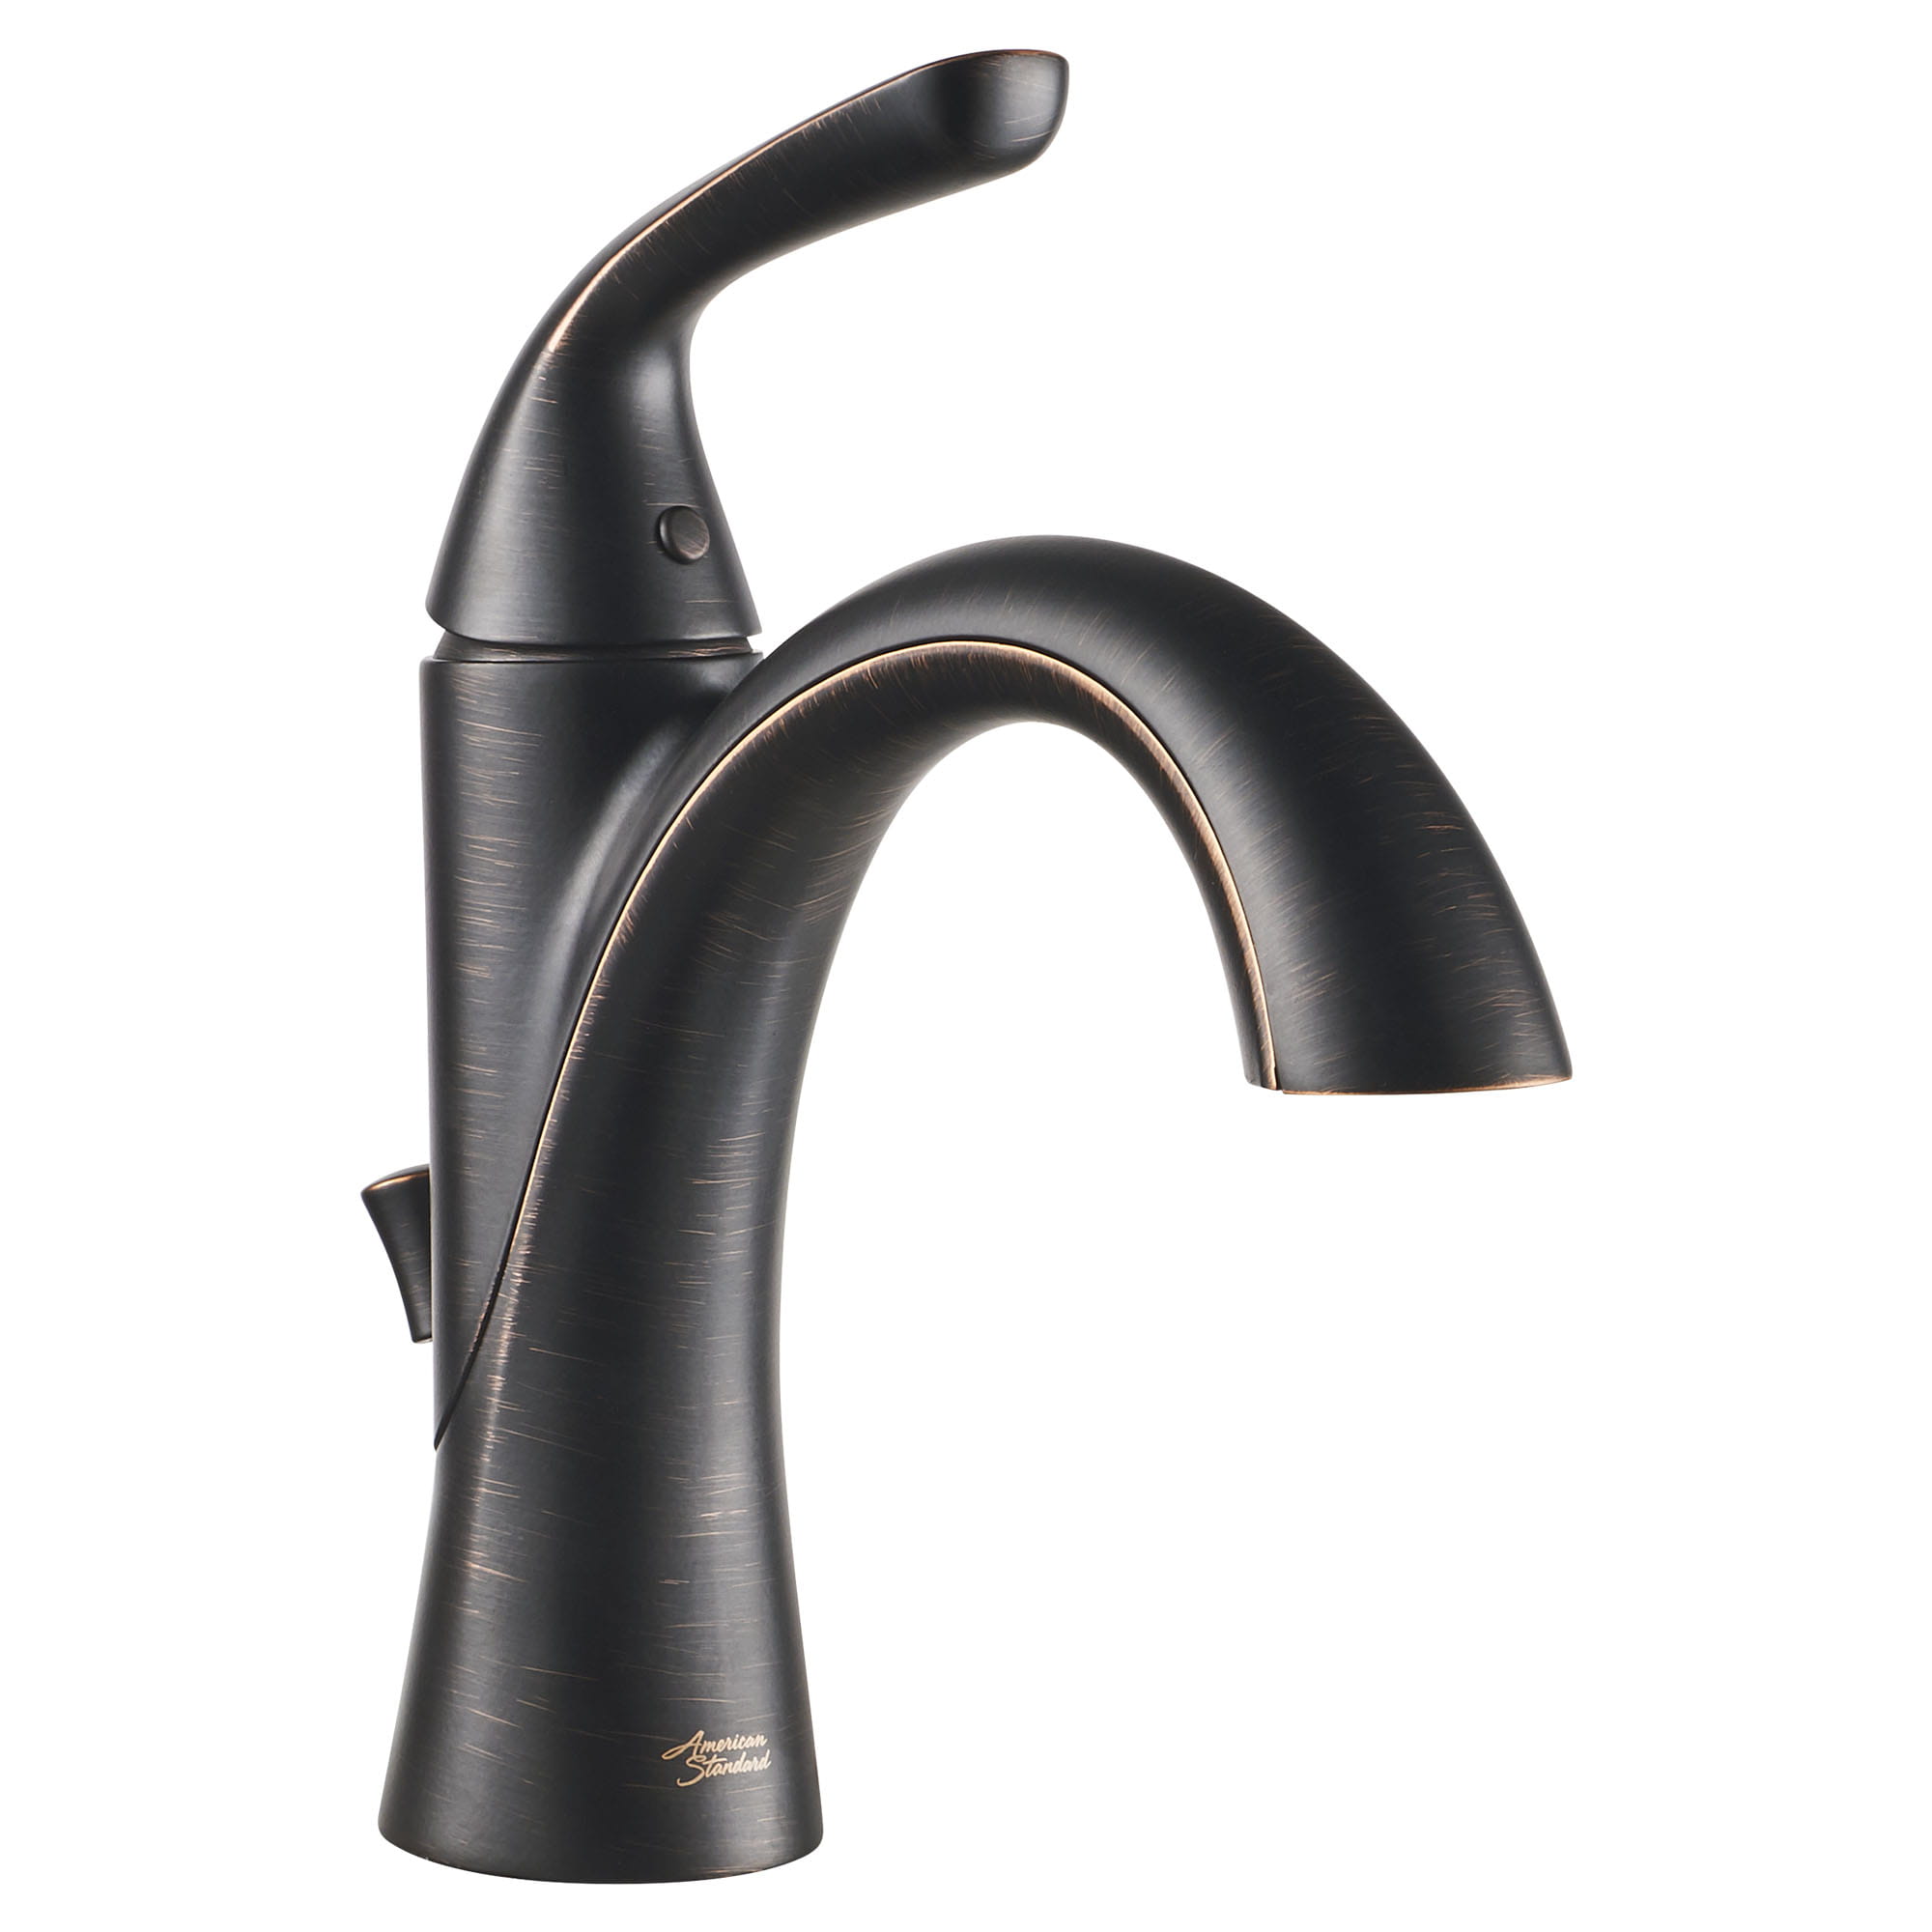 Fluent® Single Hole Single-Handle Bathroom Faucet 1.2 gpm/4.5 L/min With Lever Handle